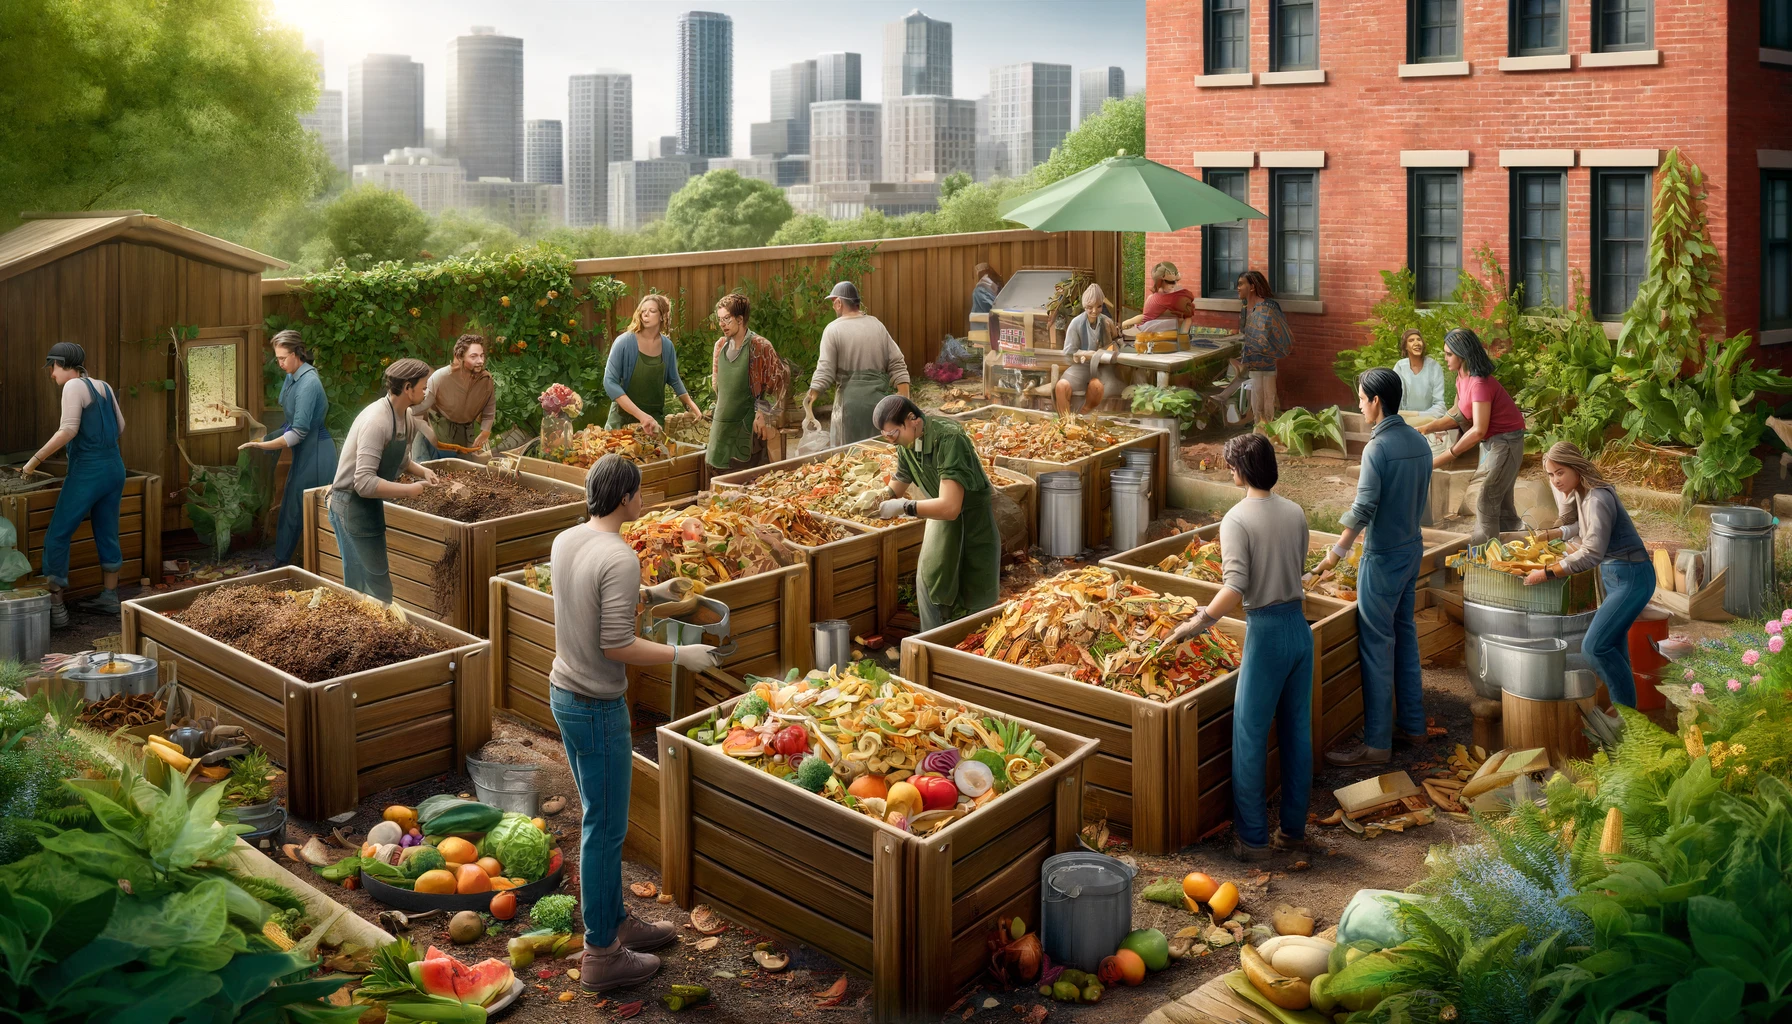 Urban Composting